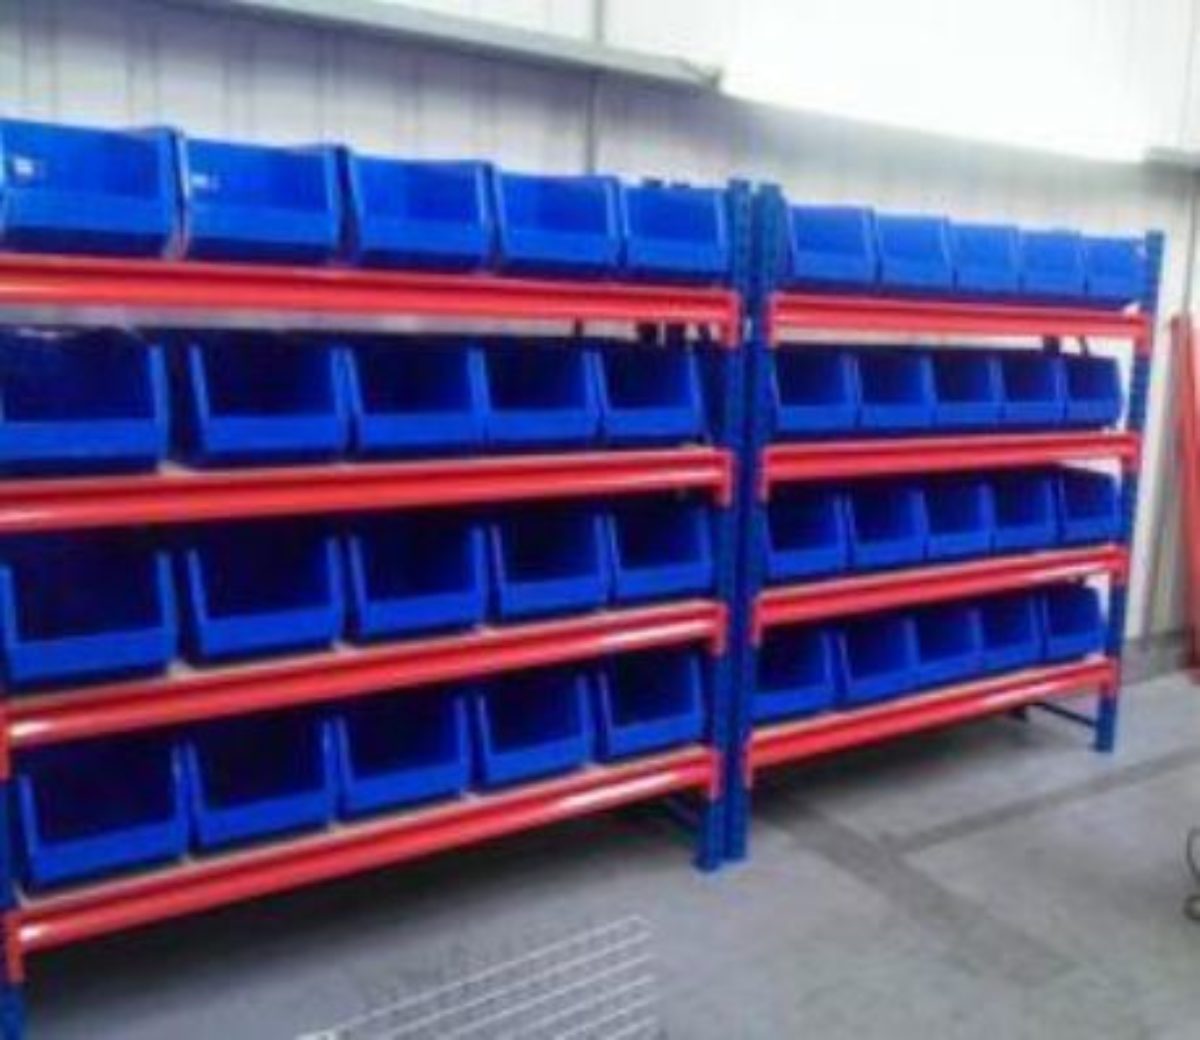 Plastic Warehouse Storage Bins & Plastic Shelving Bins